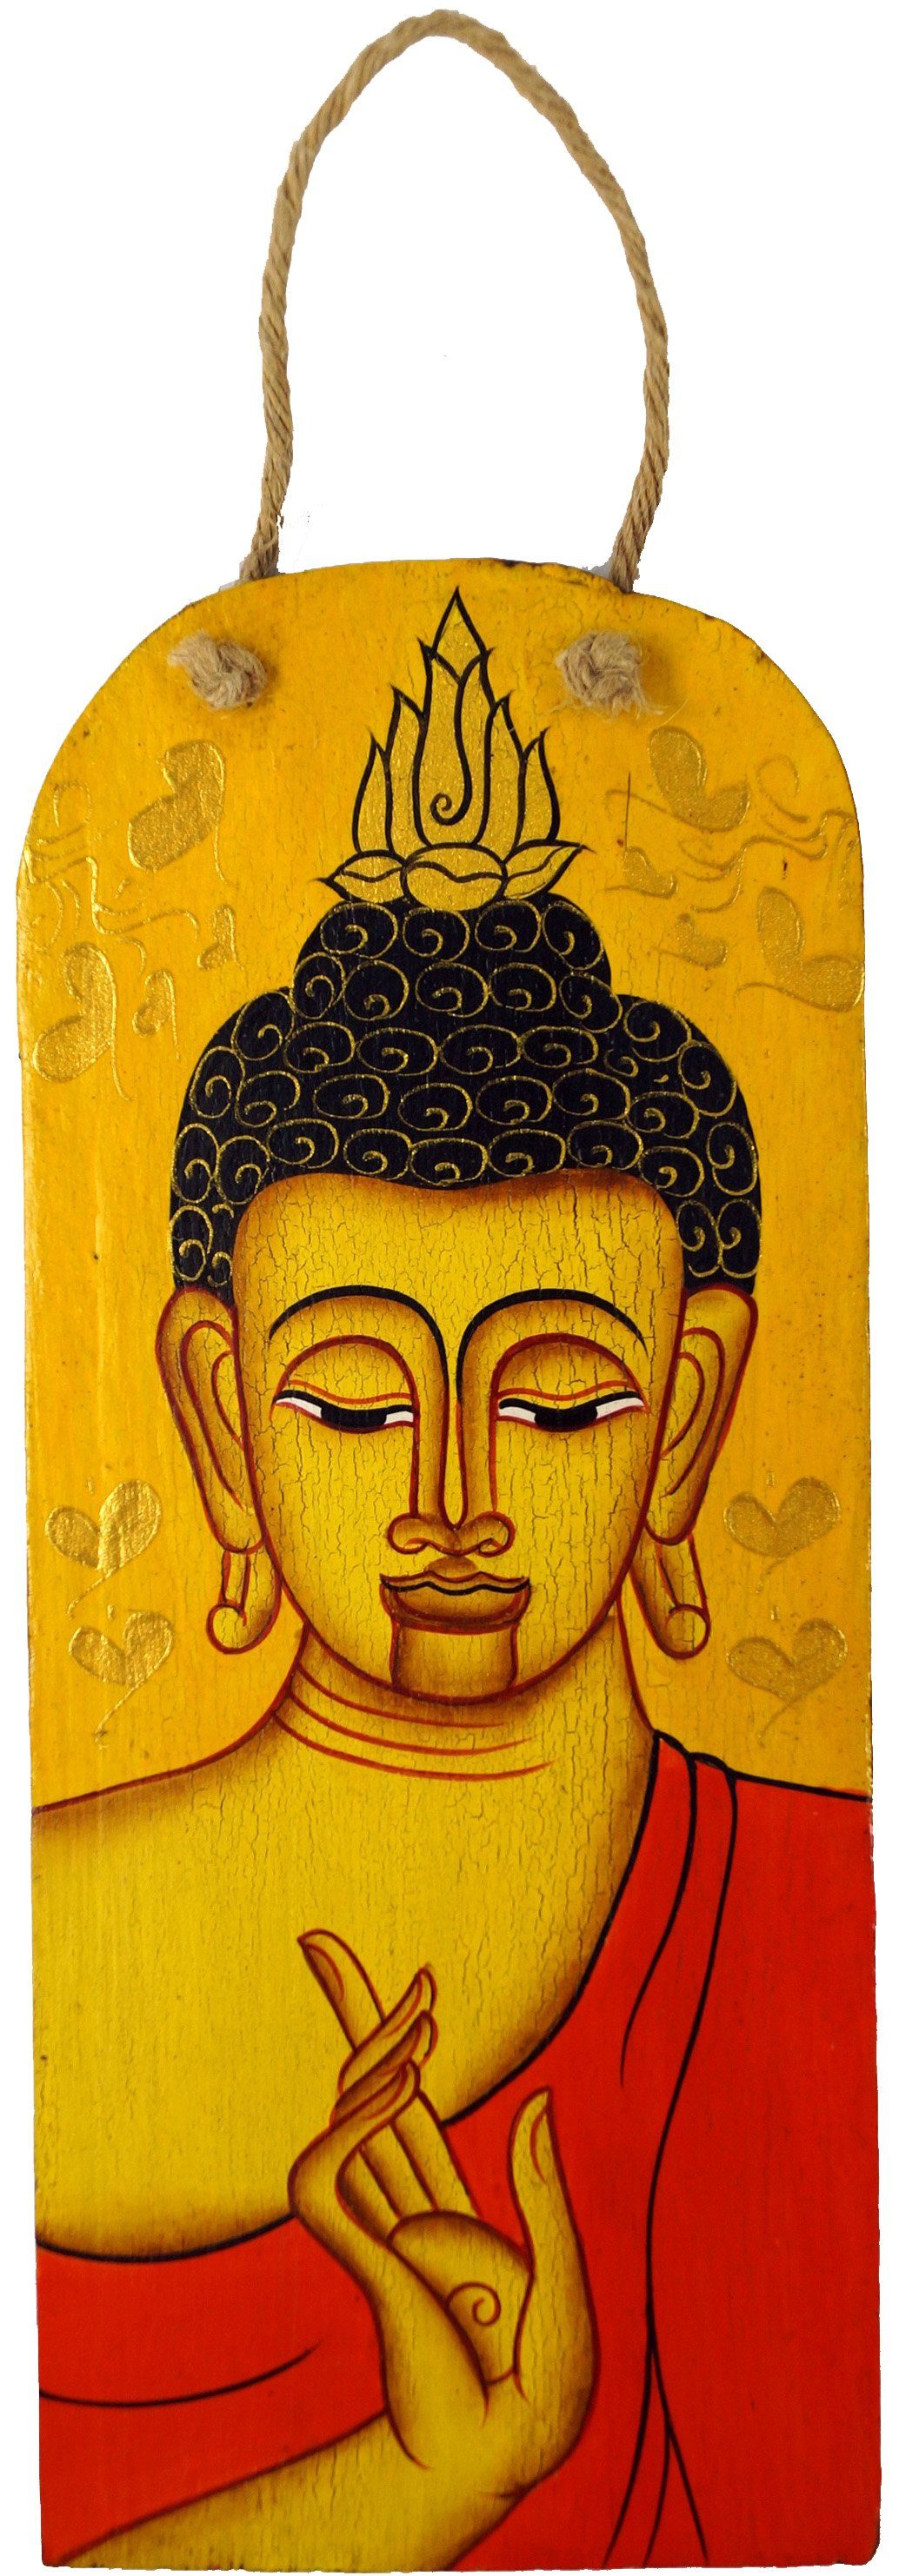 Guru-Shop Buddha gelb Wandbild Holz auf Buddhafigur - Handgemaltes